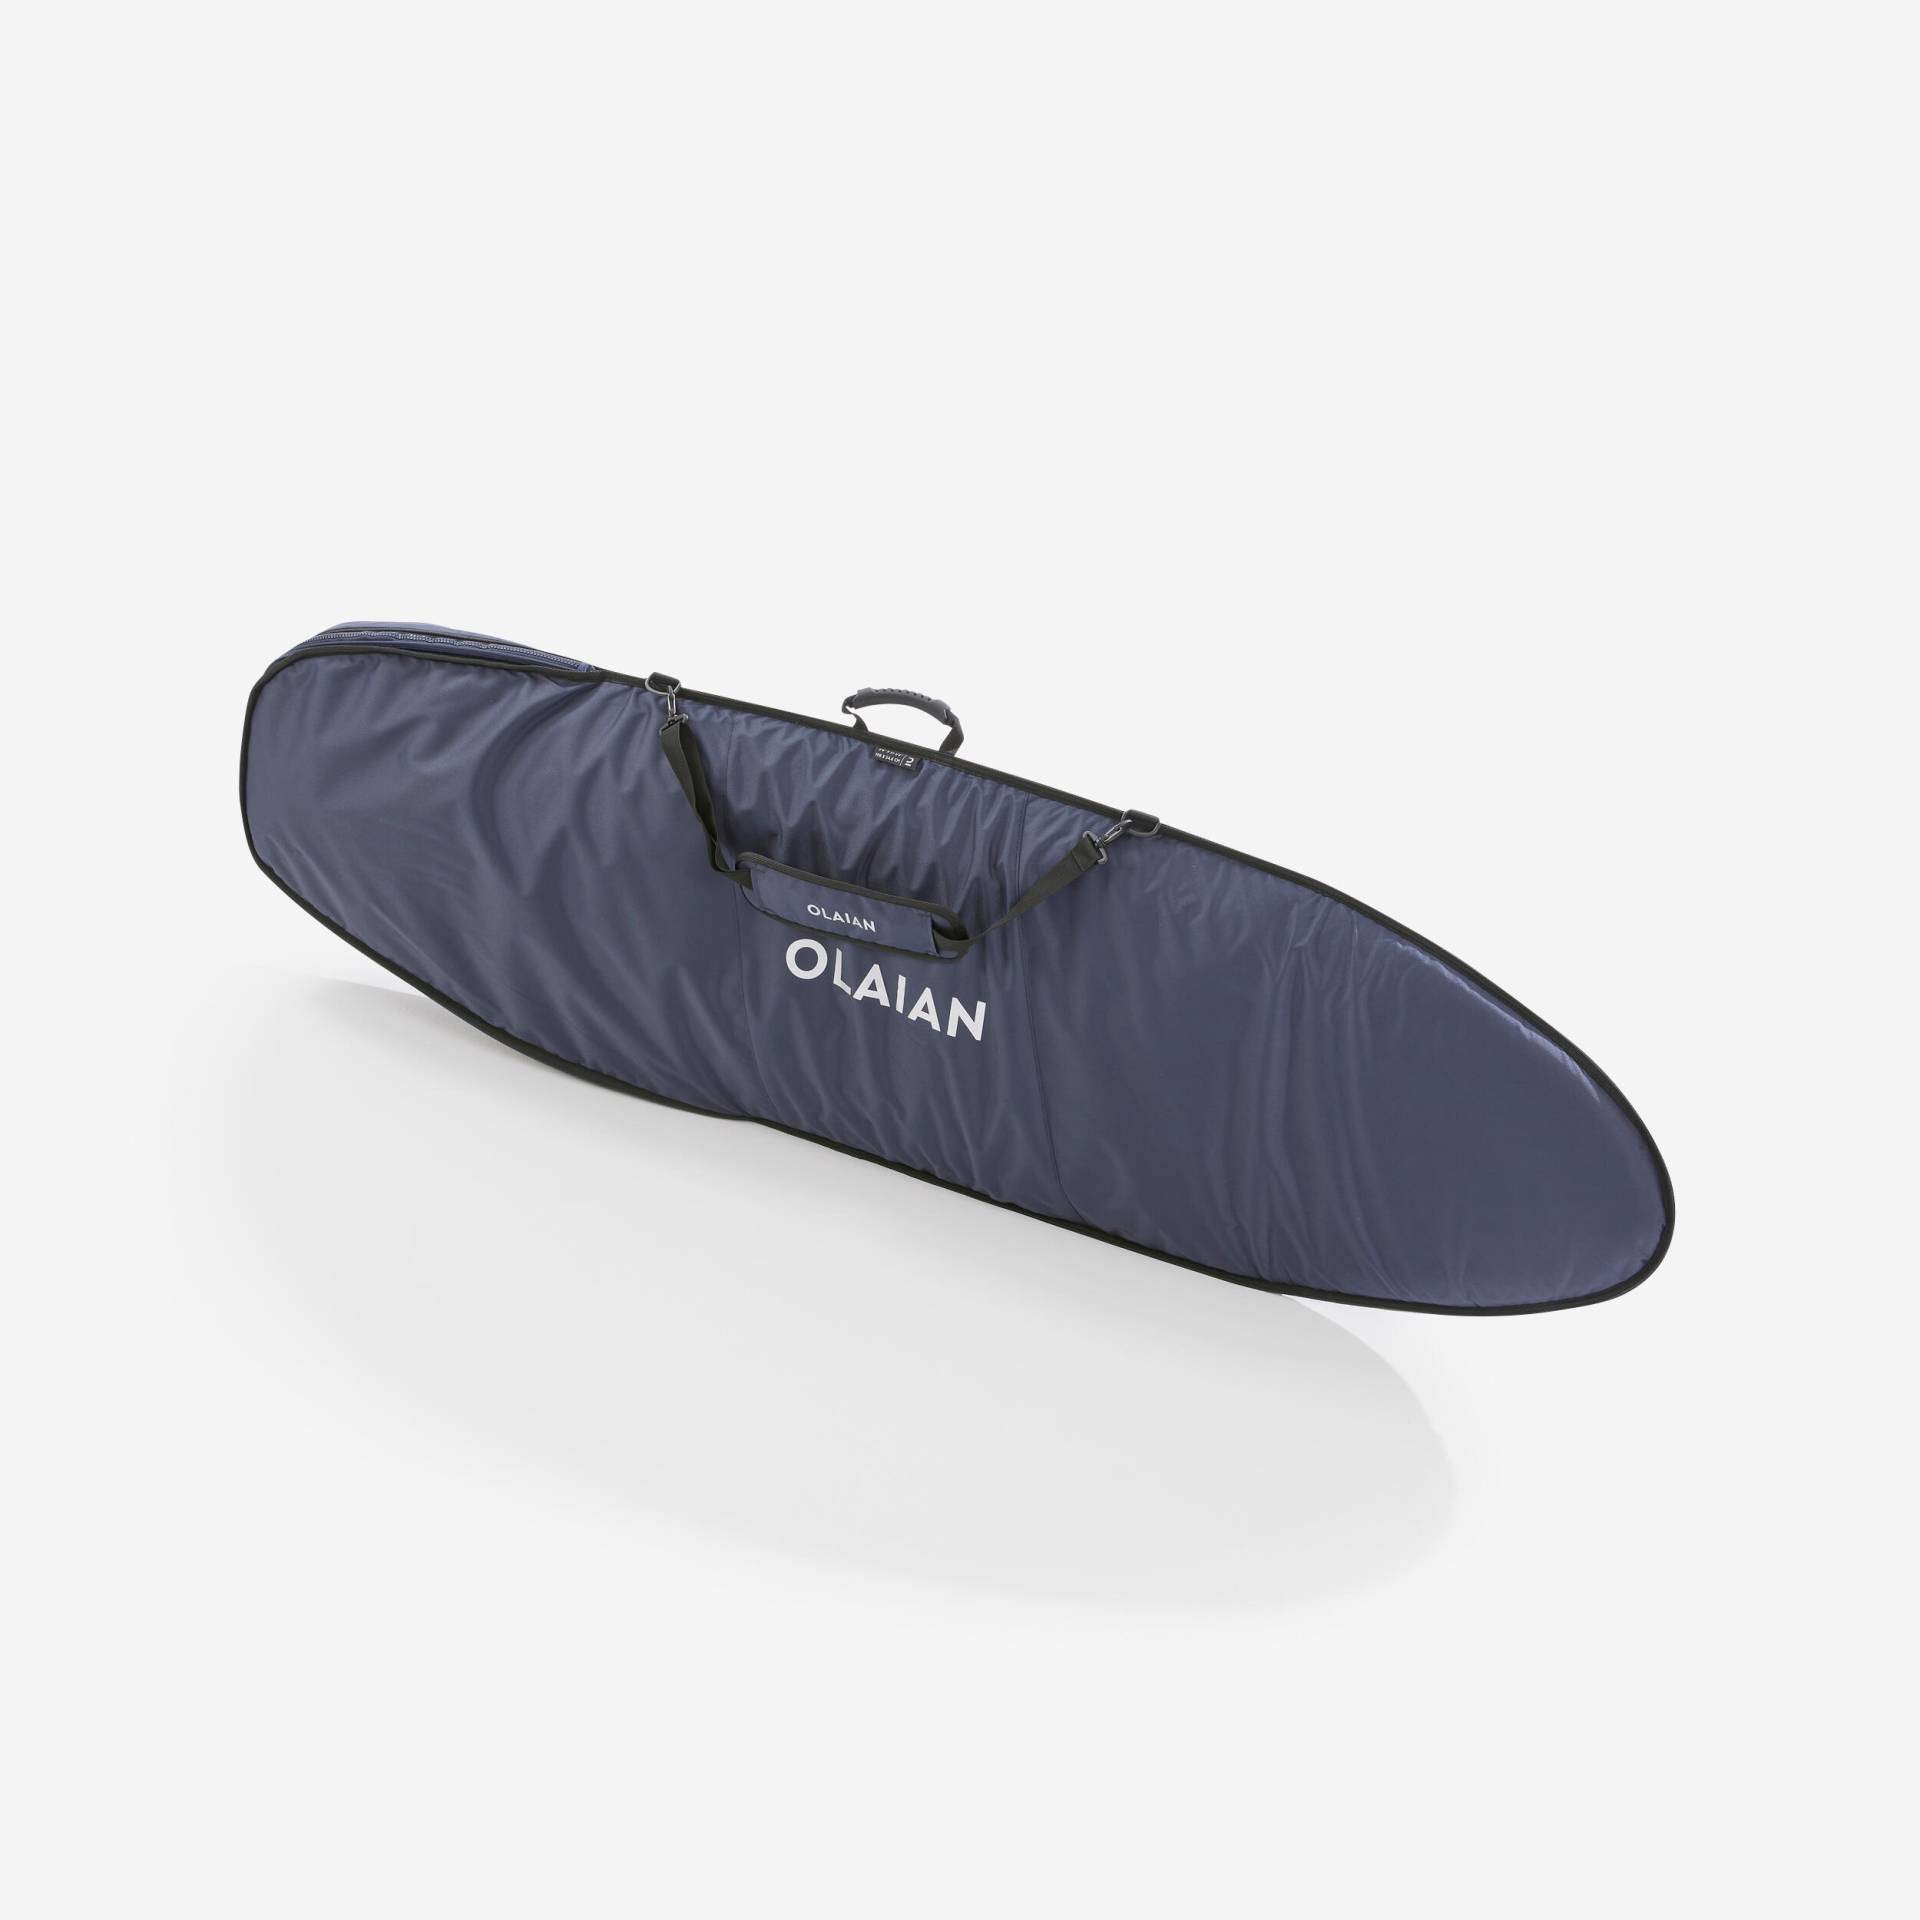 Boardbag Surfboard 900 max. 6'6" × 21 1/2" schwarzblau von OLAIAN